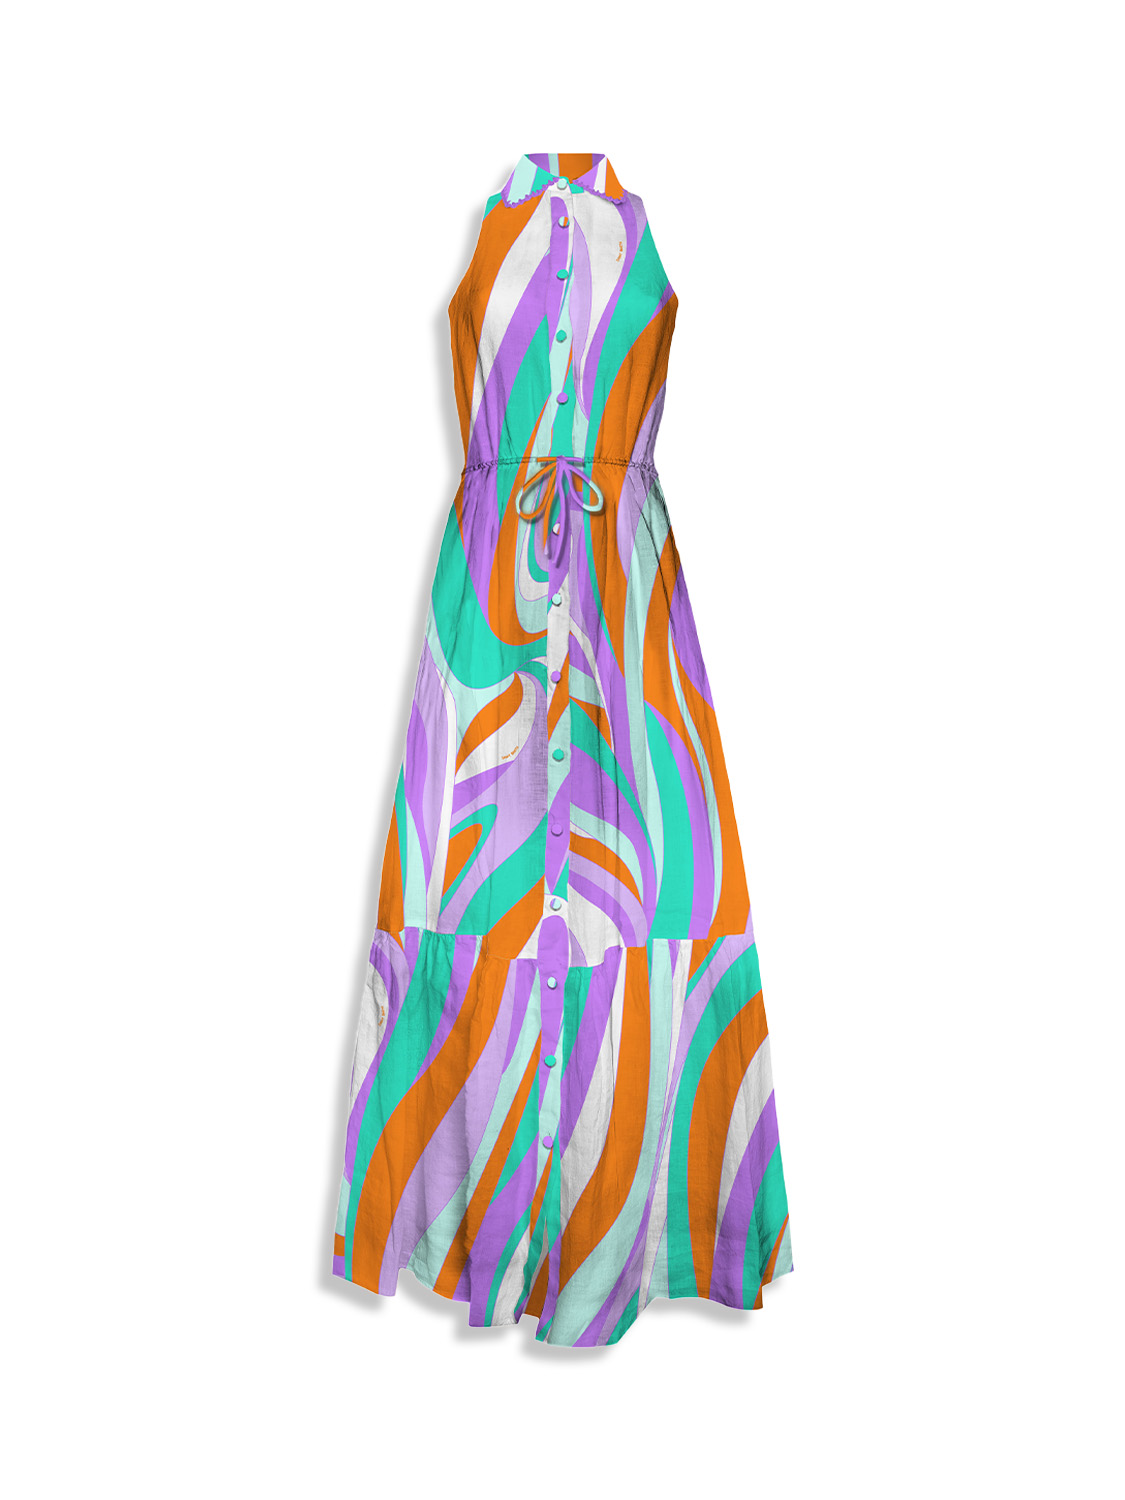 Ida - Maxi dress with striped design in cotton